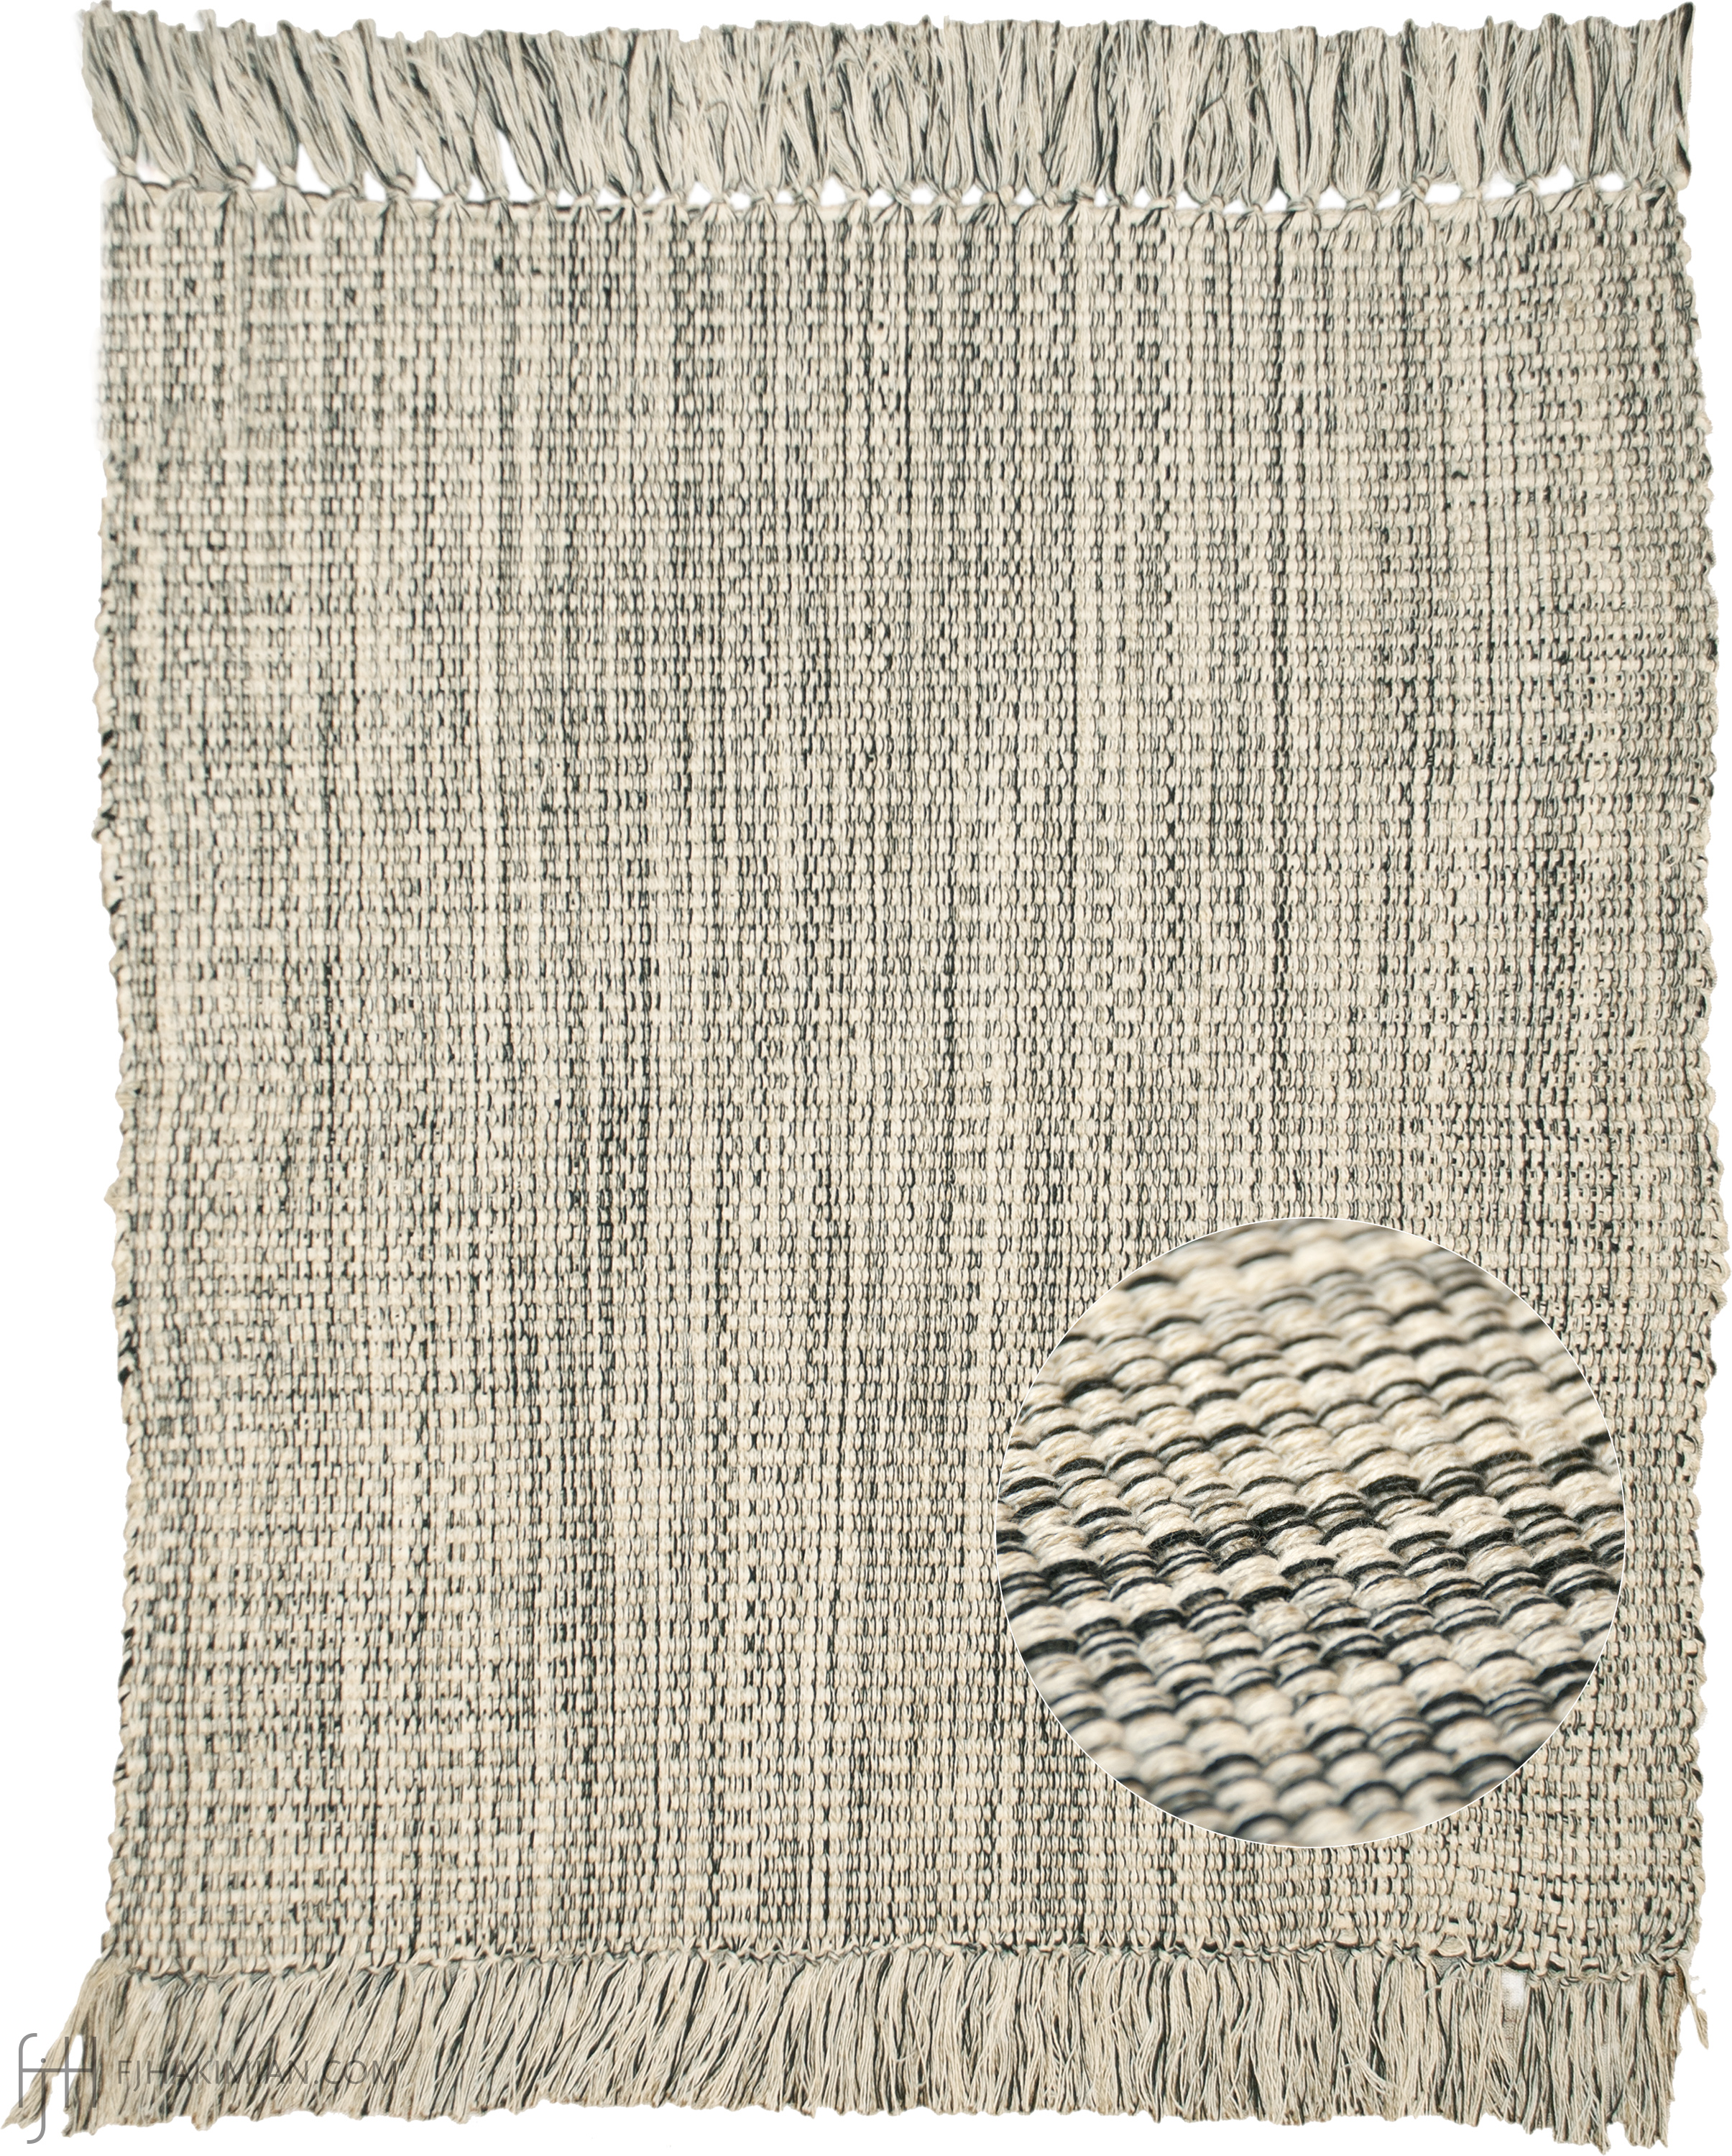 WY-HME01 | Custom South American Carpet | FJ Hakimian | Carpet Gallery in NYC